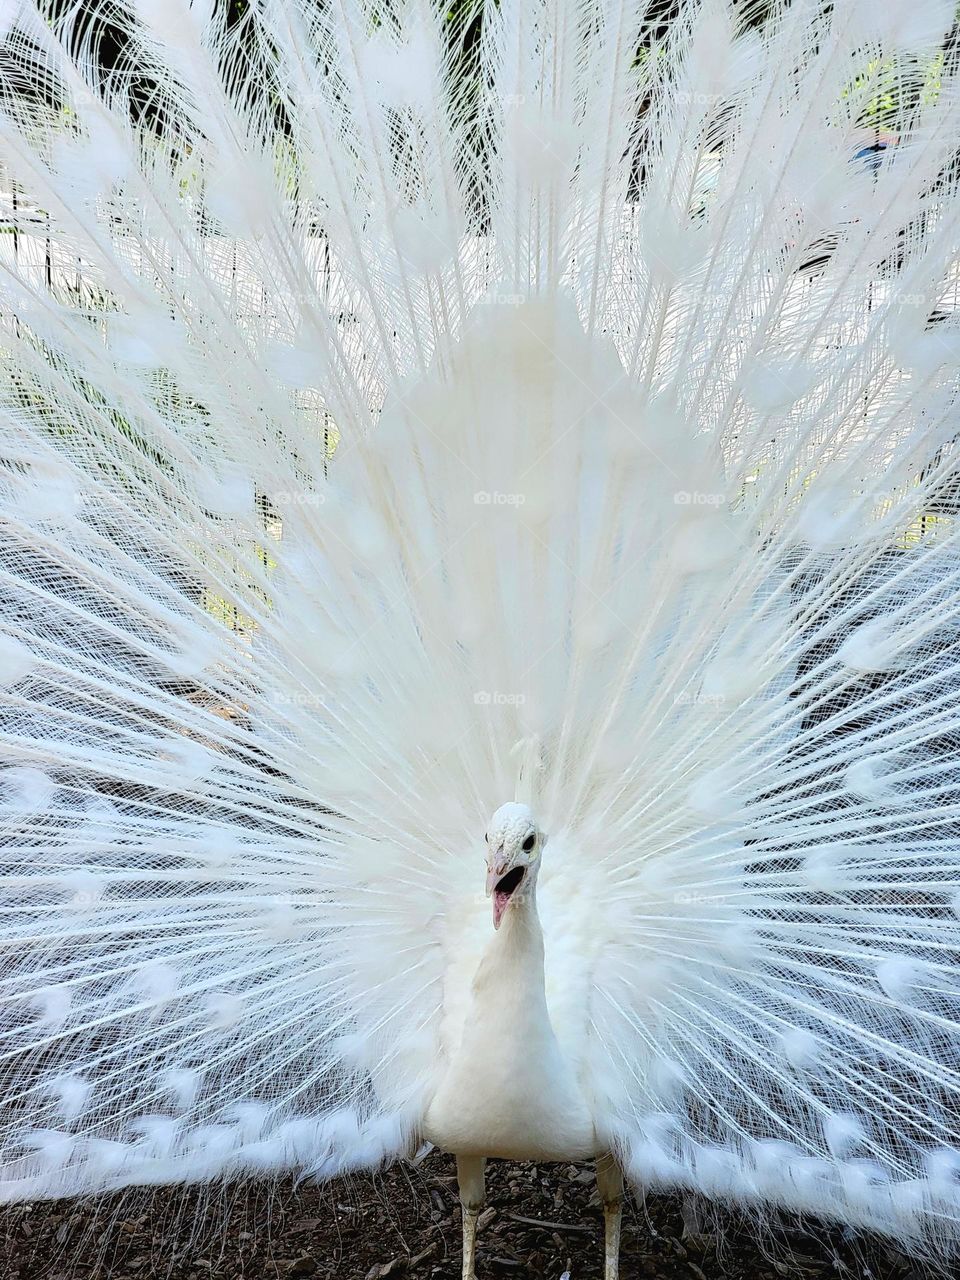 Rare White Peacock Yelling